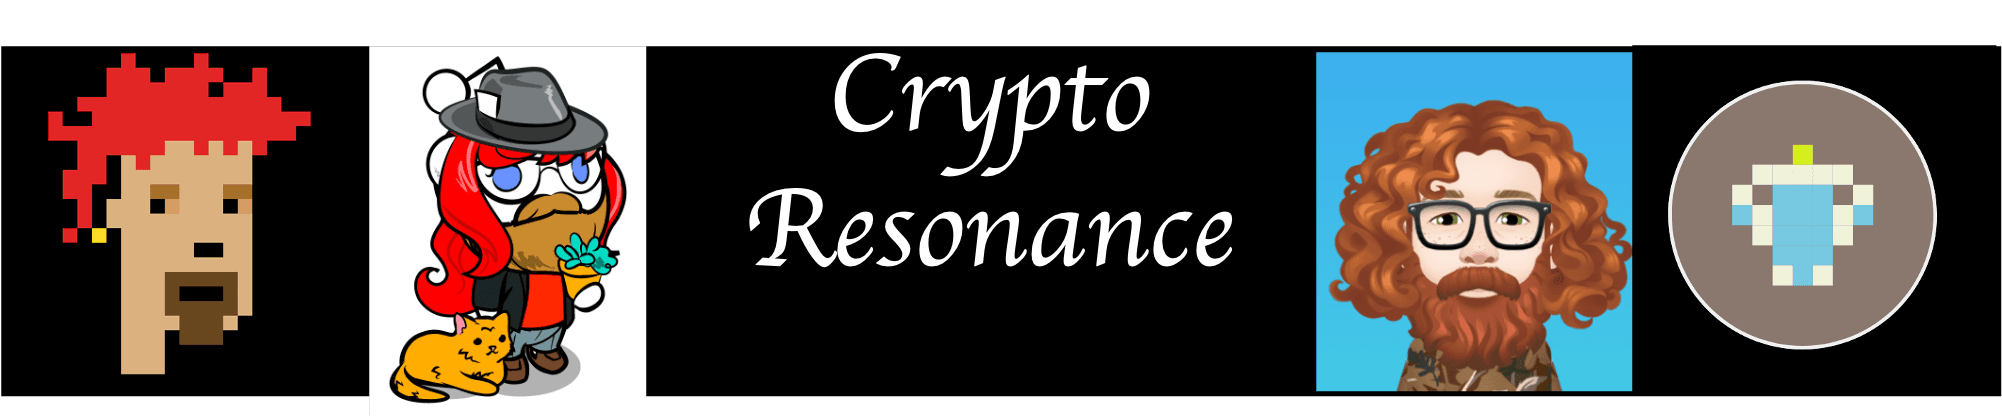 CryptoResonance bannière